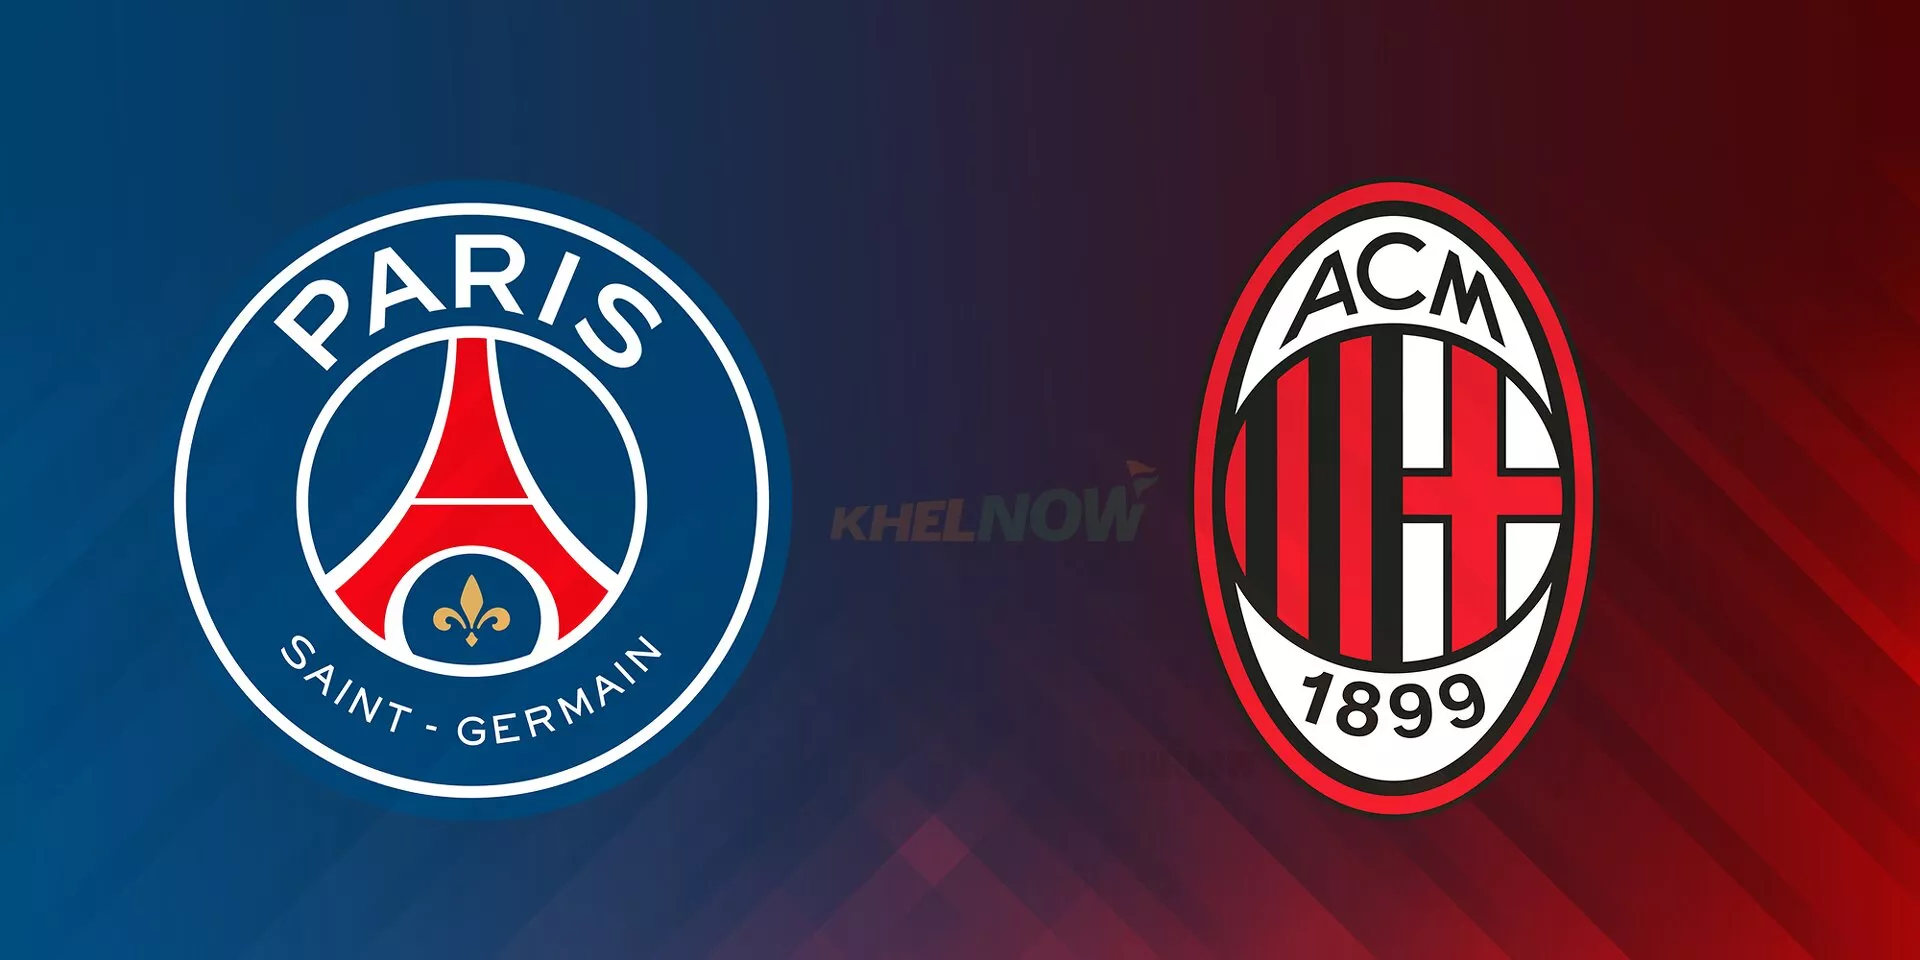 AC Milan and Paris Saint-Germain (PSG) will go head to head in a